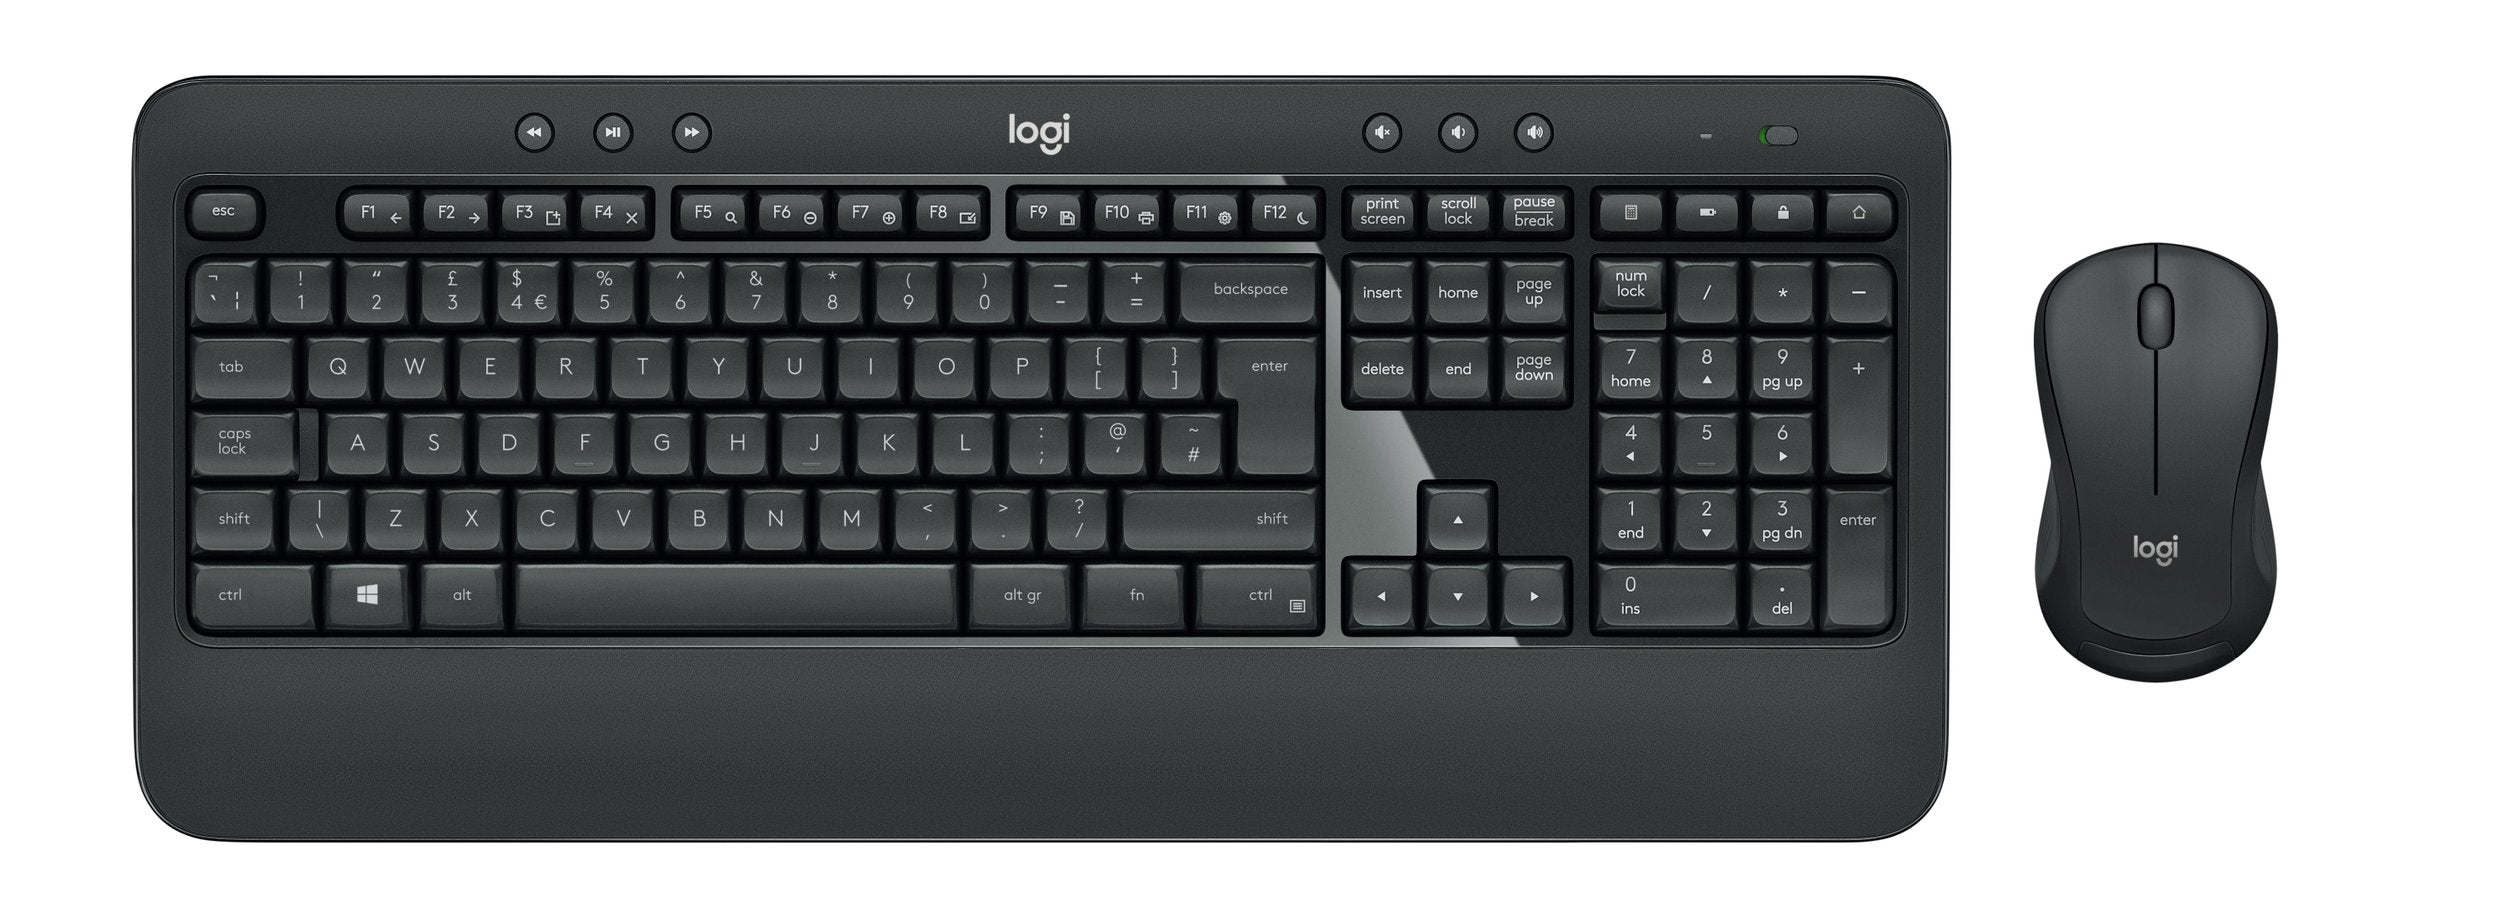 (B1) Logitech MK540 Advanced Wireless Keyboard and Mouse Combo for Windows, IT QWERTY